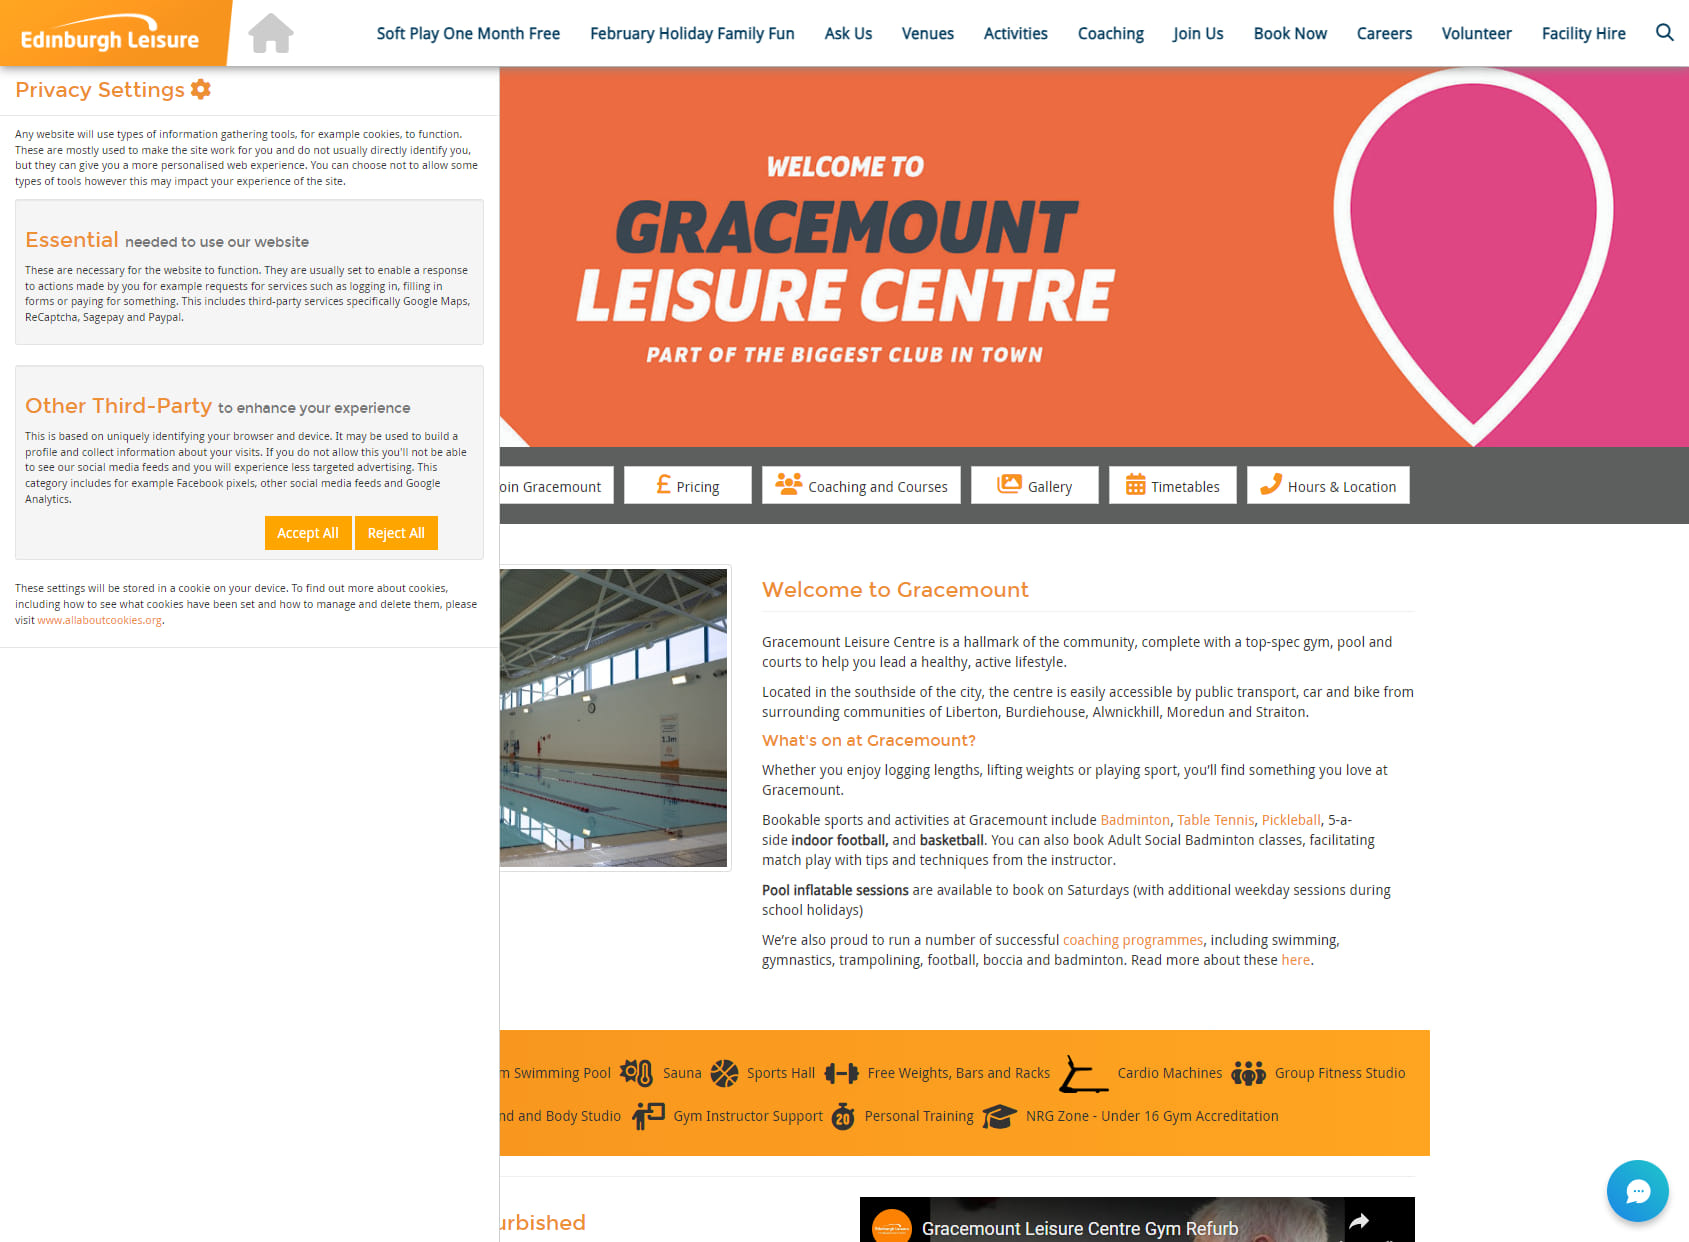 Gracemount Leisure Centre